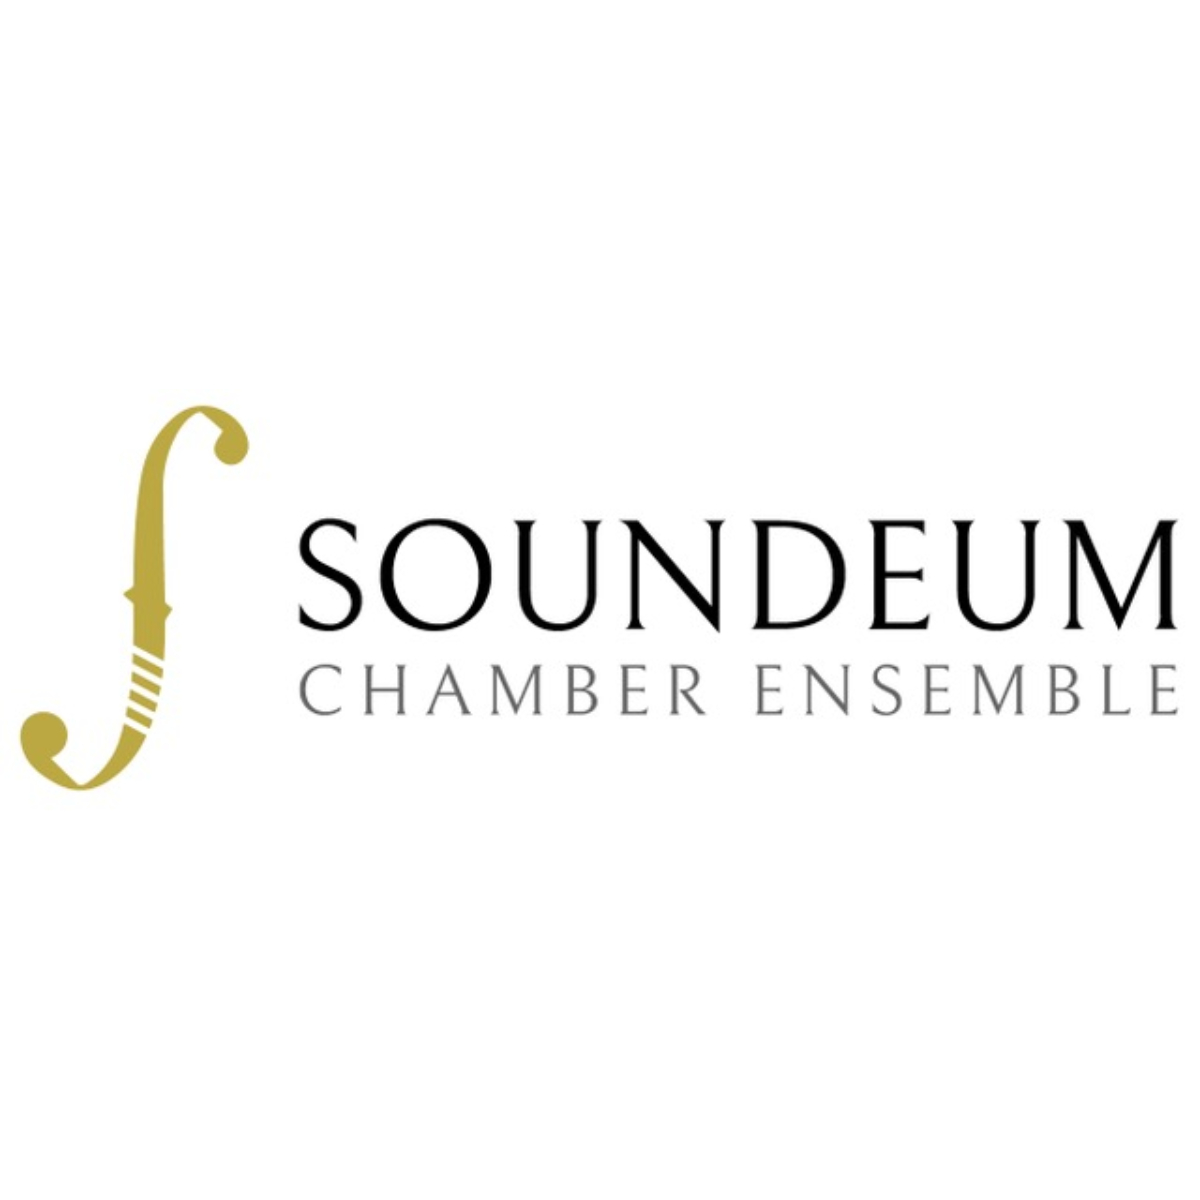 Soundeum Chamber Ensemble